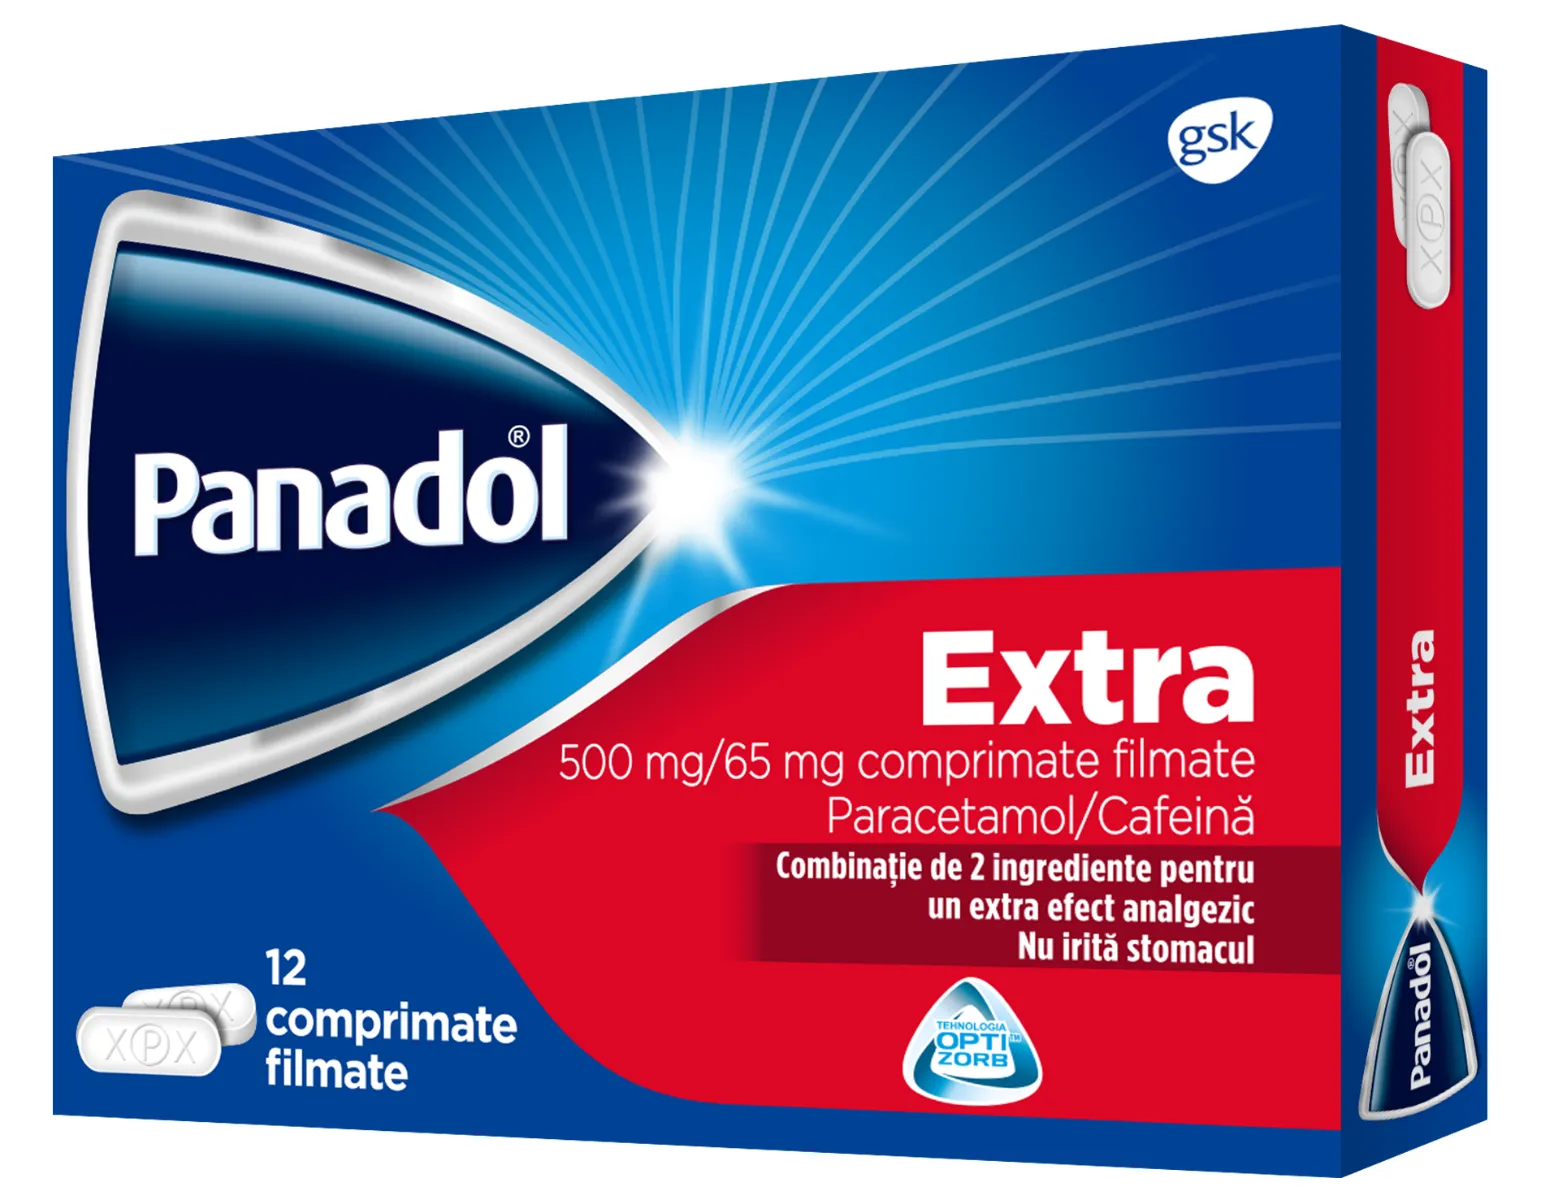 Panadol Extra, 12 comprimate, GSK 